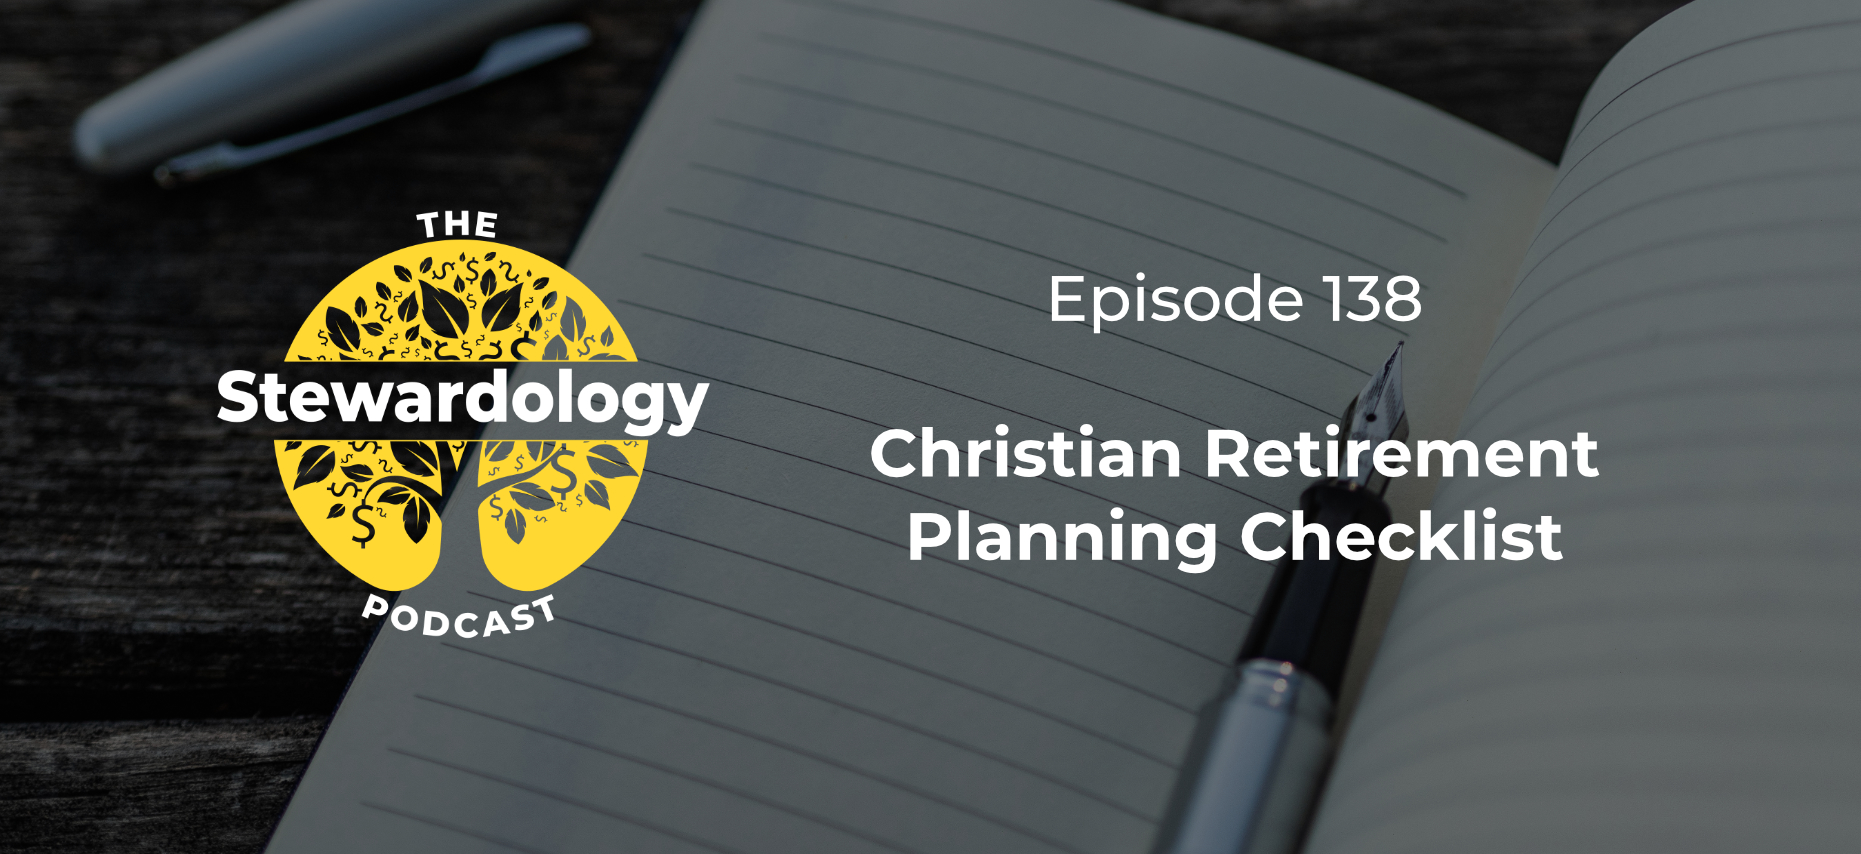 Christian Retirement Planning Checklist